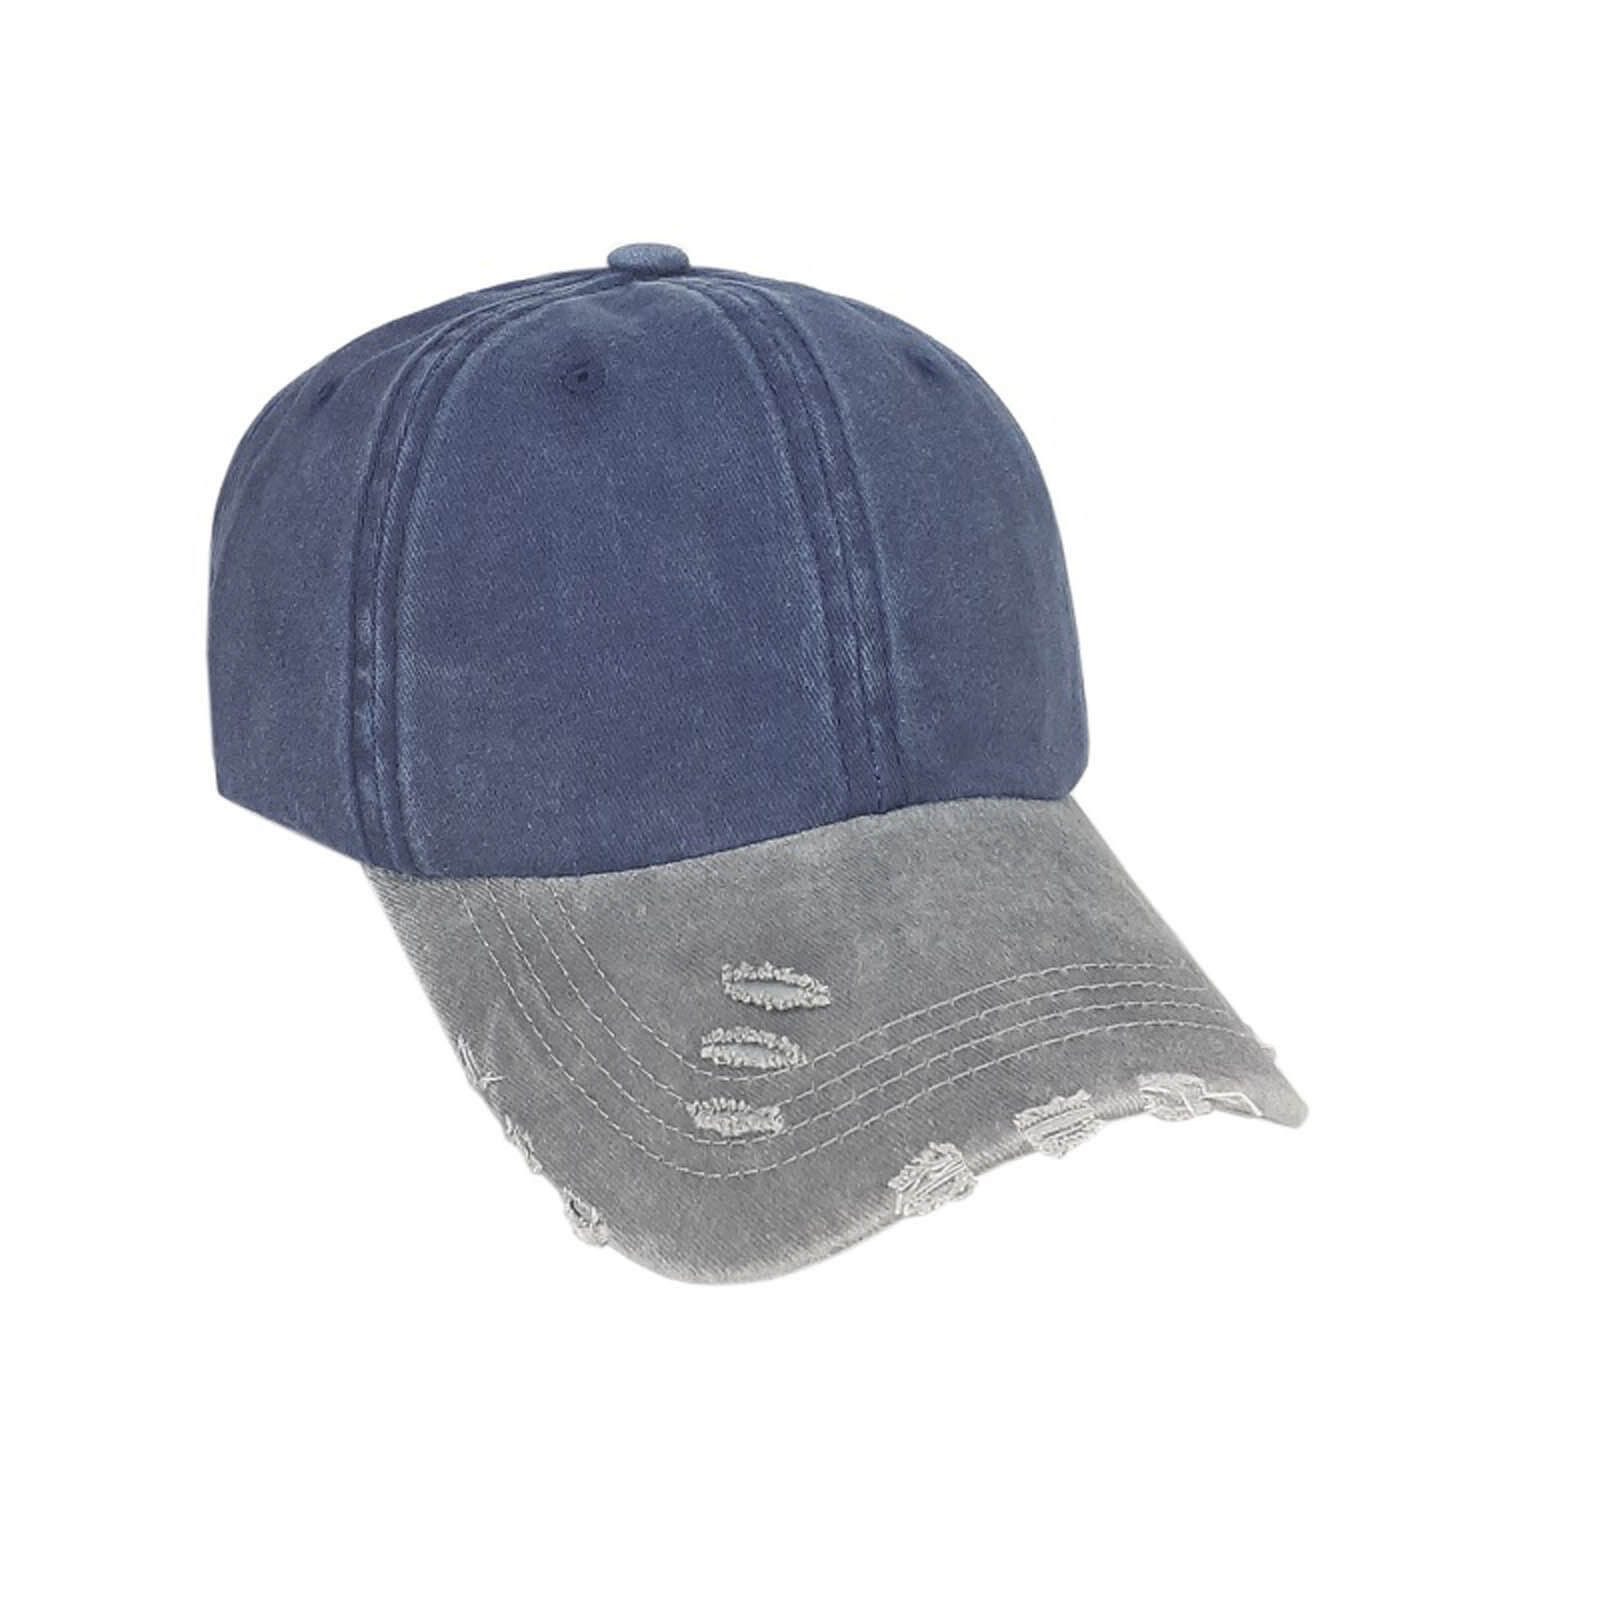 Leoberg Schirmmütze Unisex Baseball Cap Baseballkappe - Kappe in verschiedenen Designs